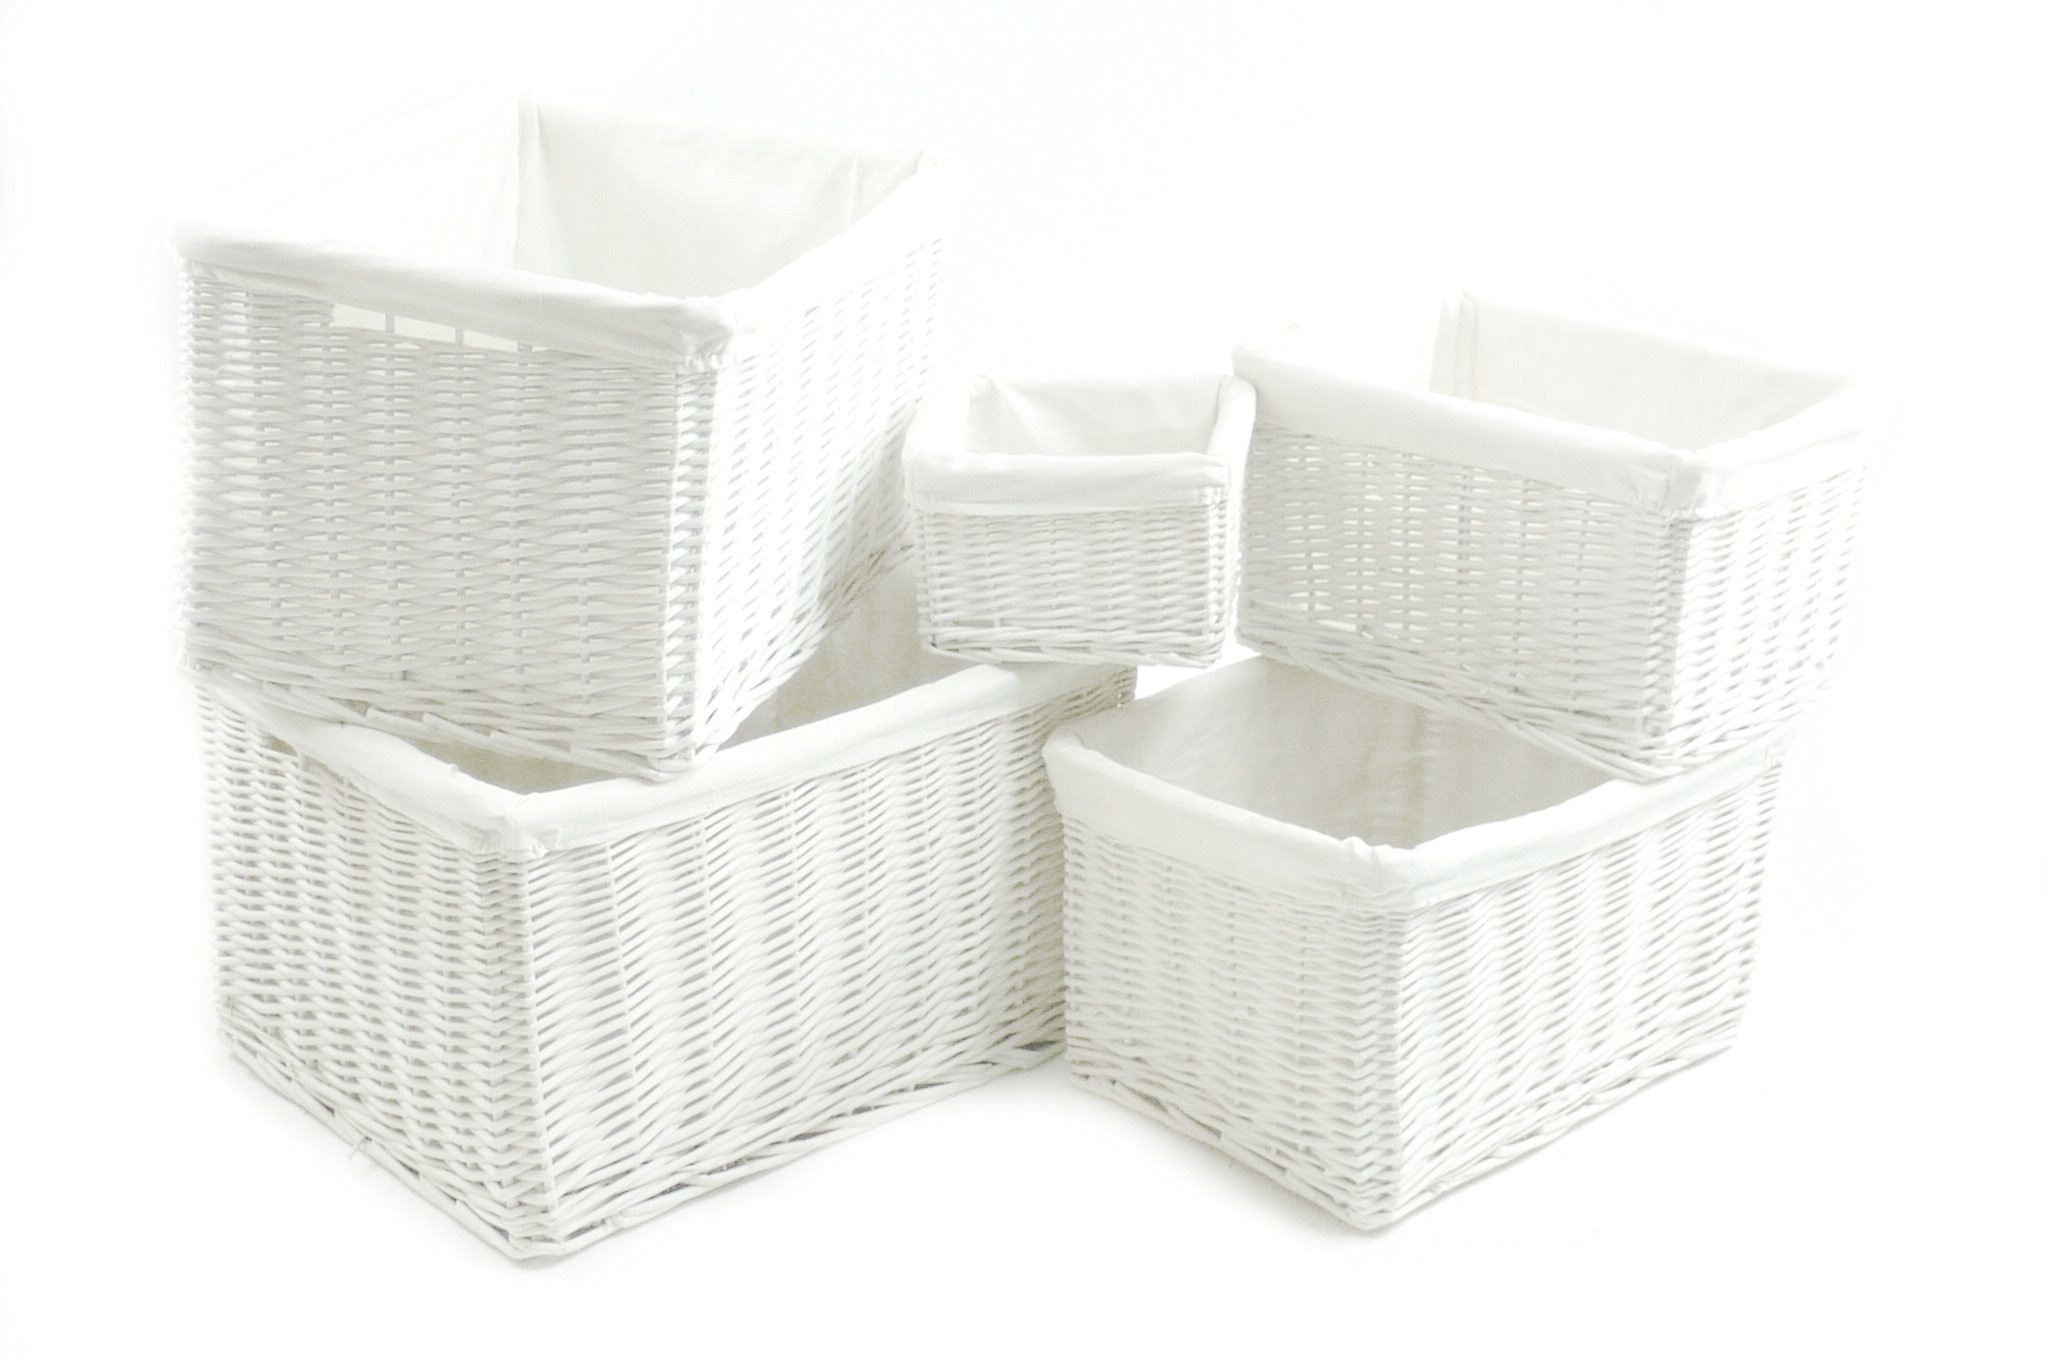 Best ideas about Baby Storage Basket
. Save or Pin Wicker Storage Baskets For Nursery TheNurseries Now.